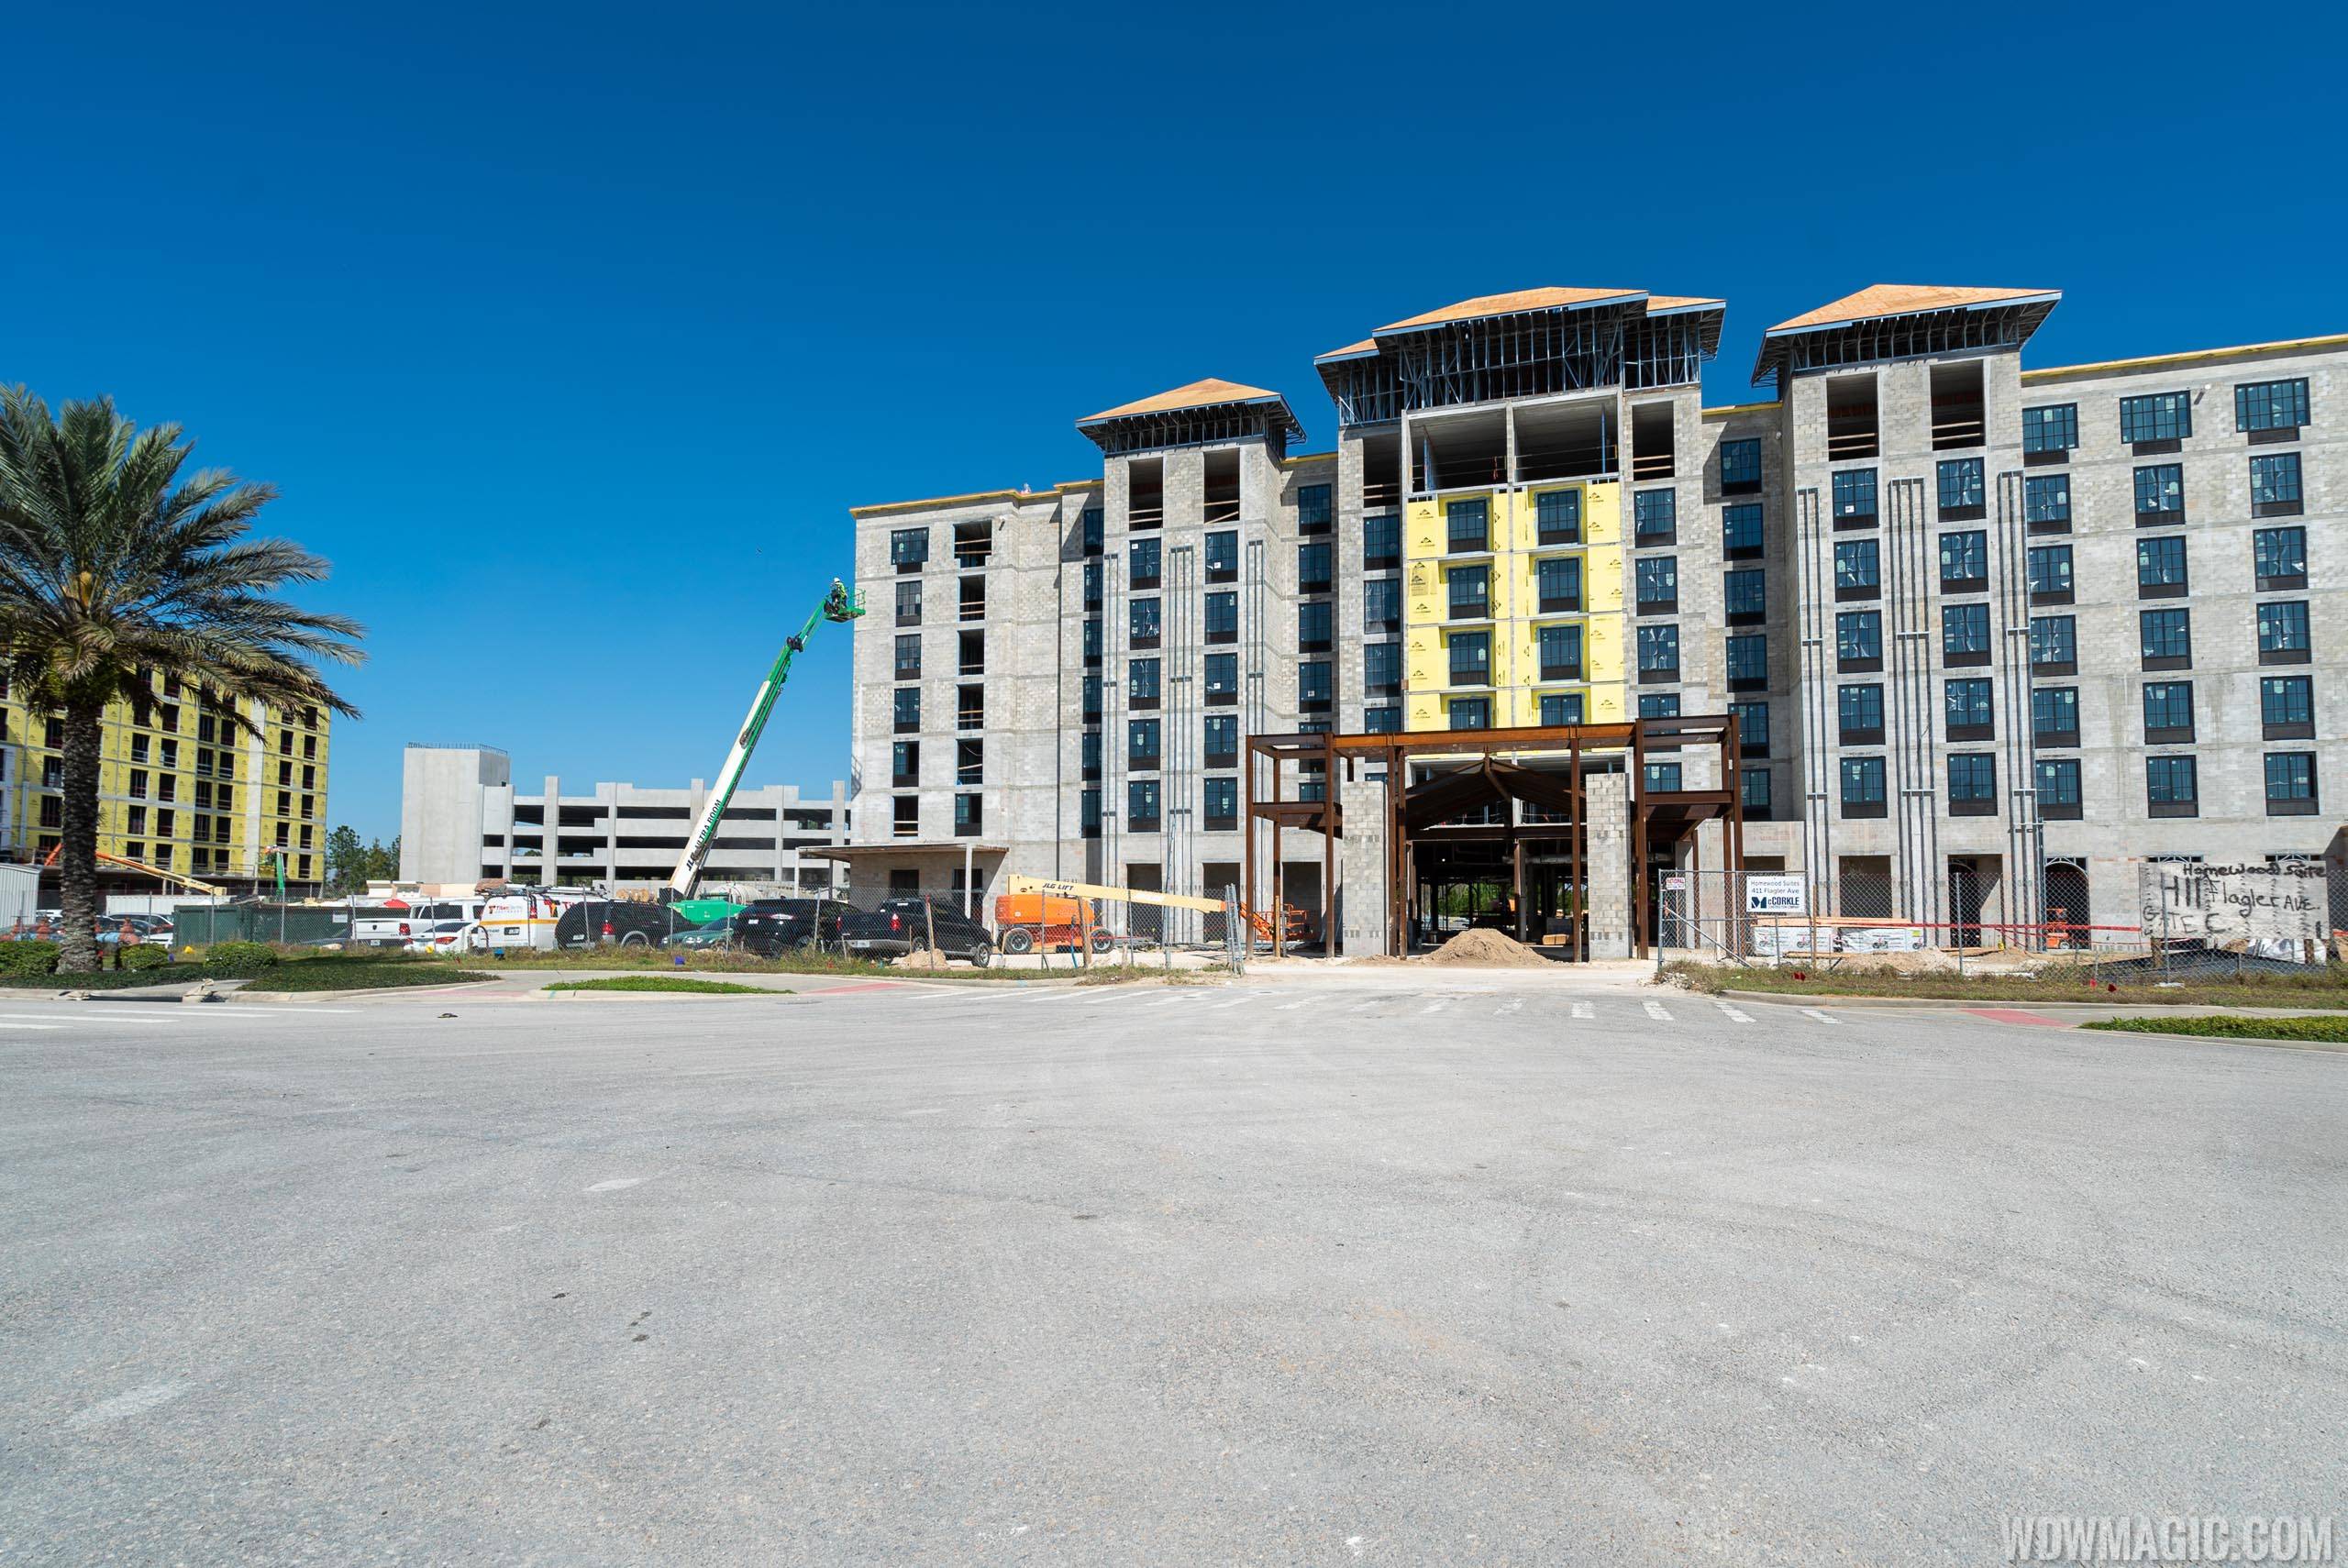 Flamingo Crossings Hotel construction - March 1 2020